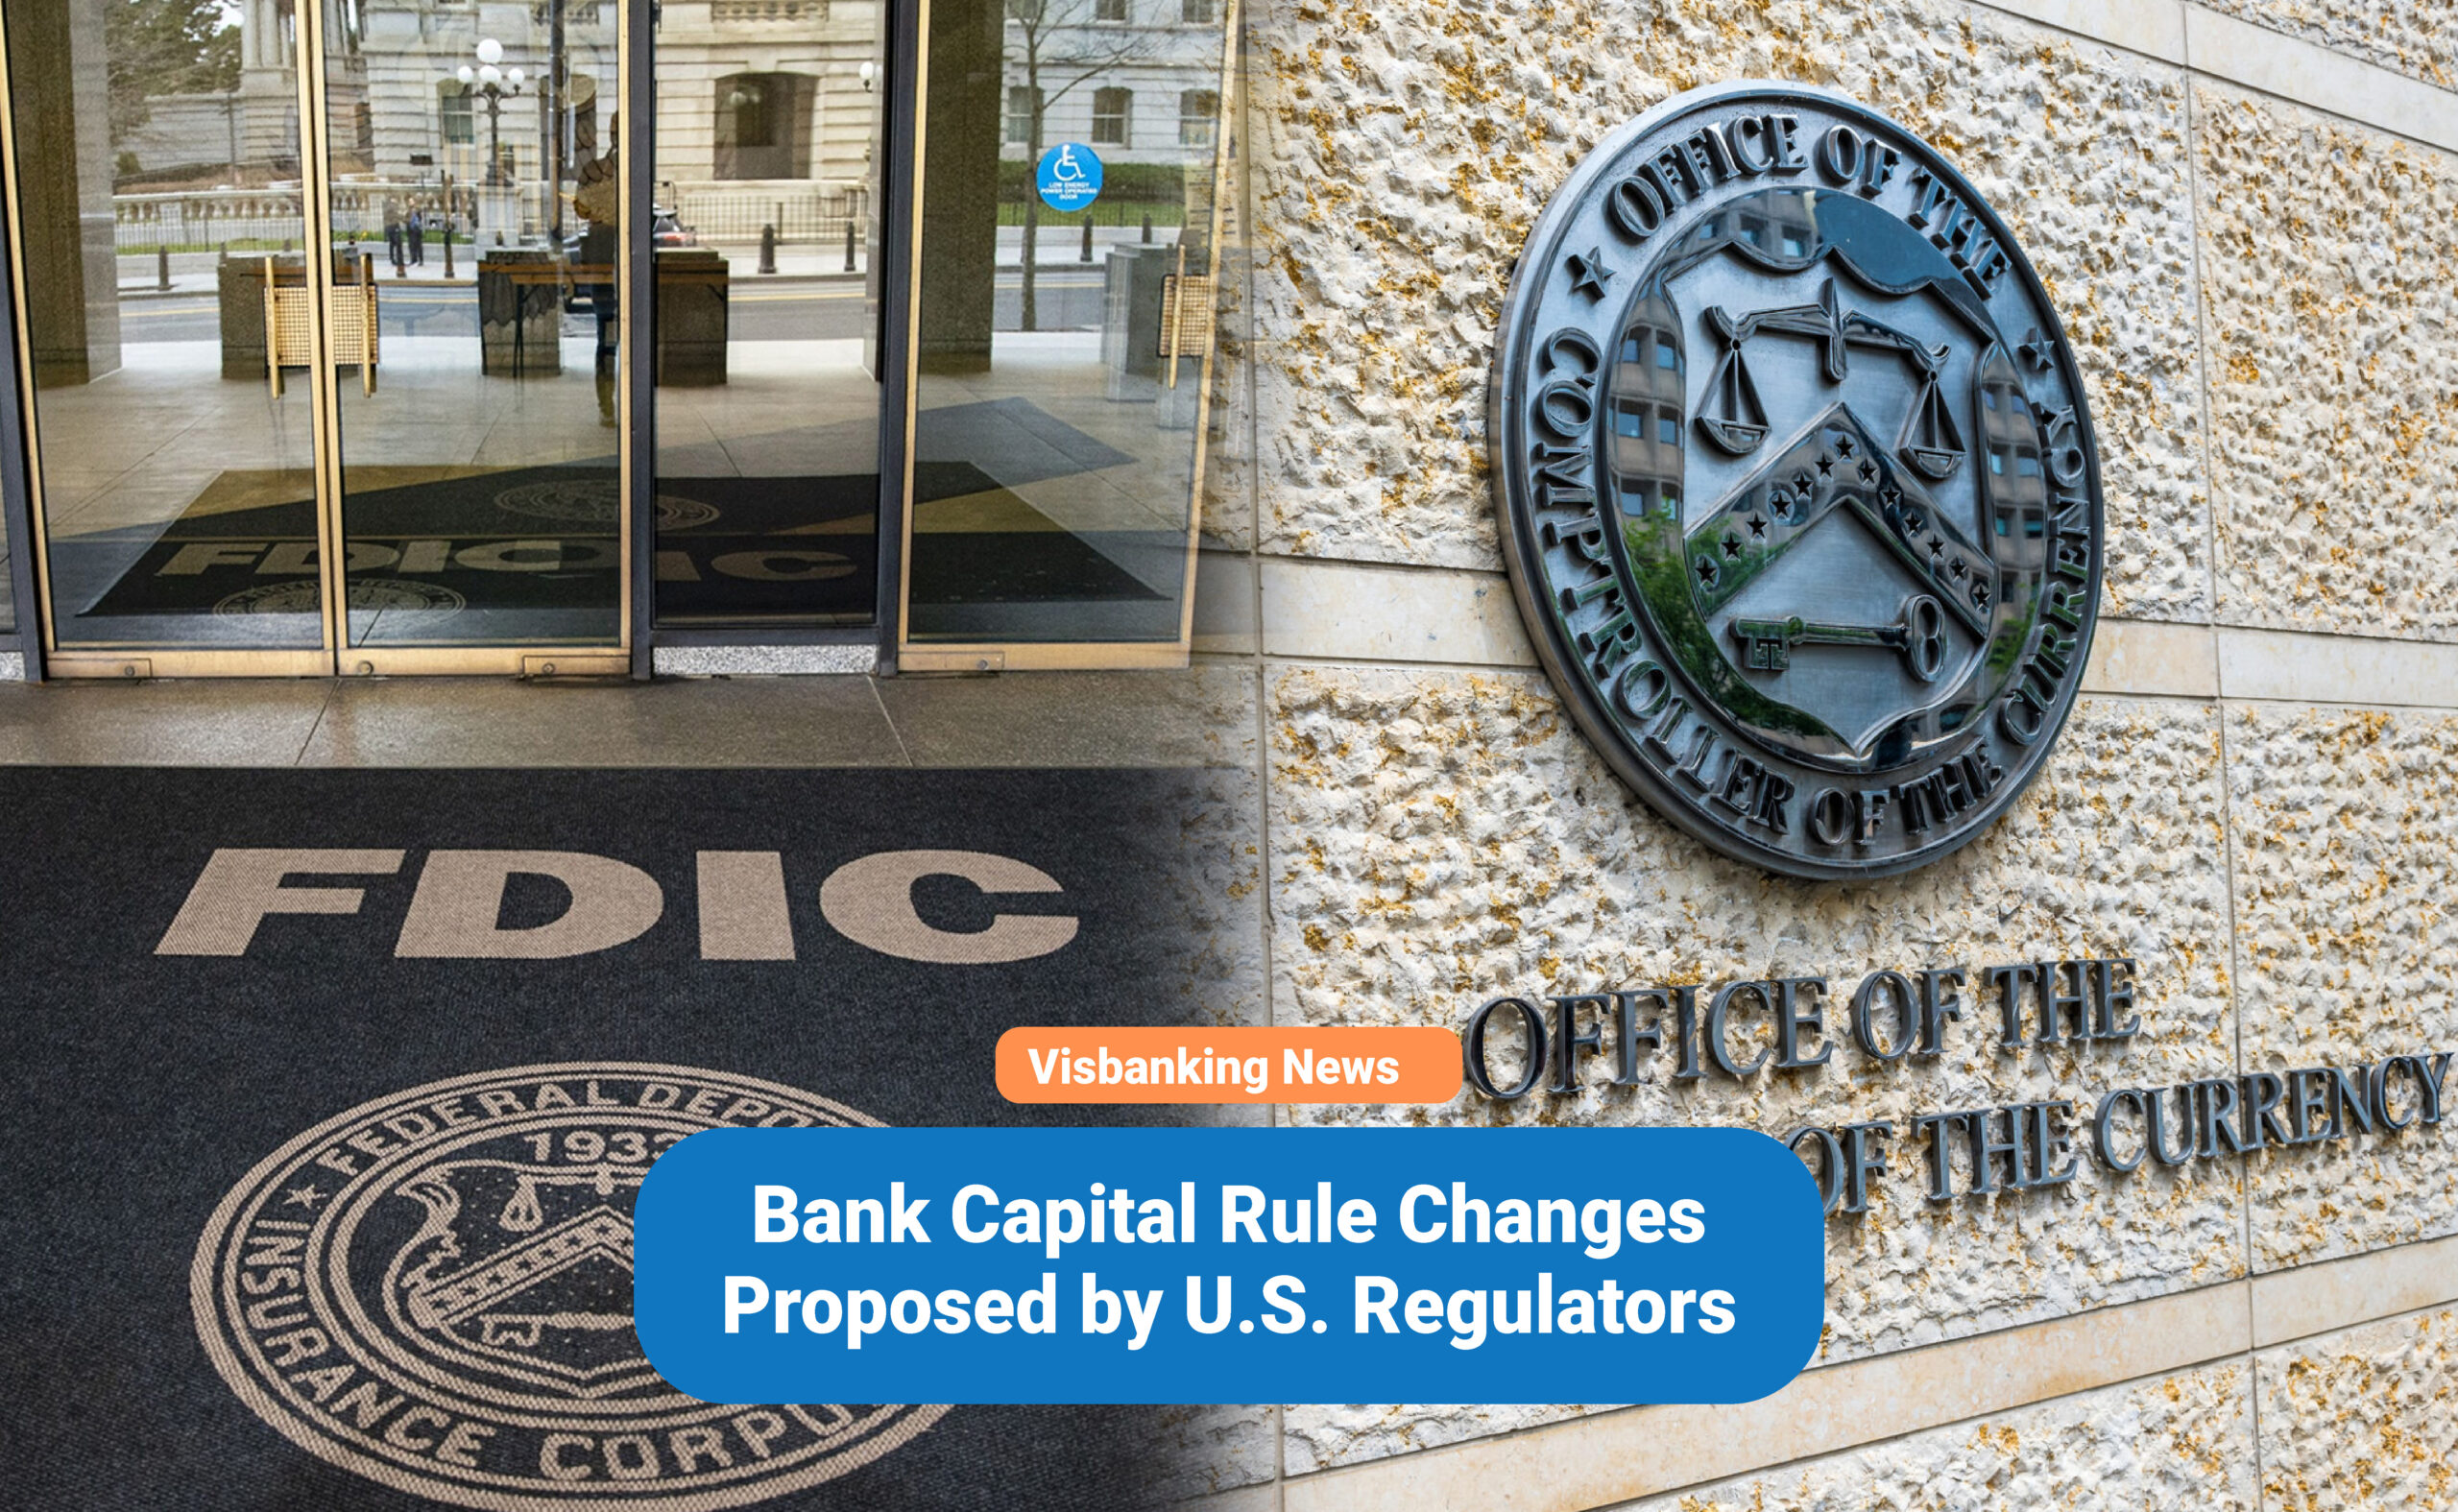 Bank Capital Rule Changes Proposed by U.S. Regulators